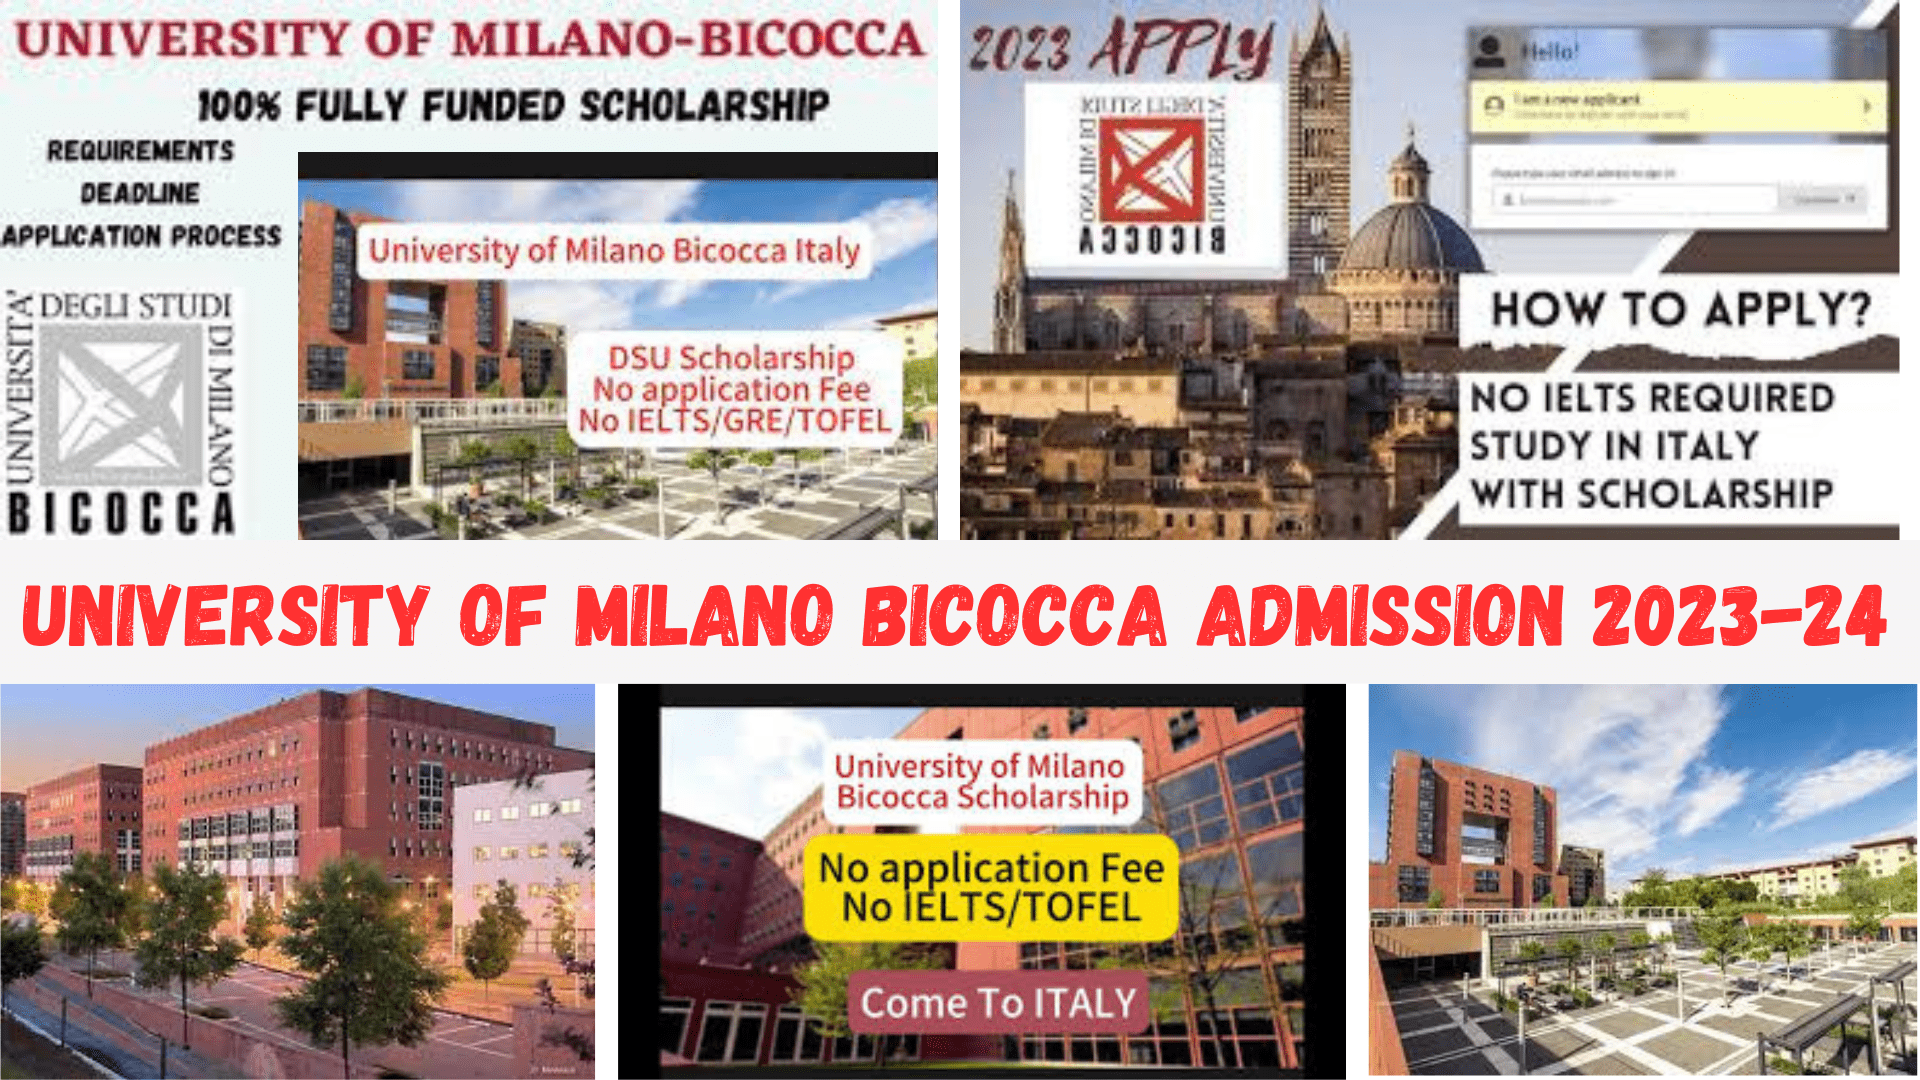 University of Milano Bicocca Admission 2023-24